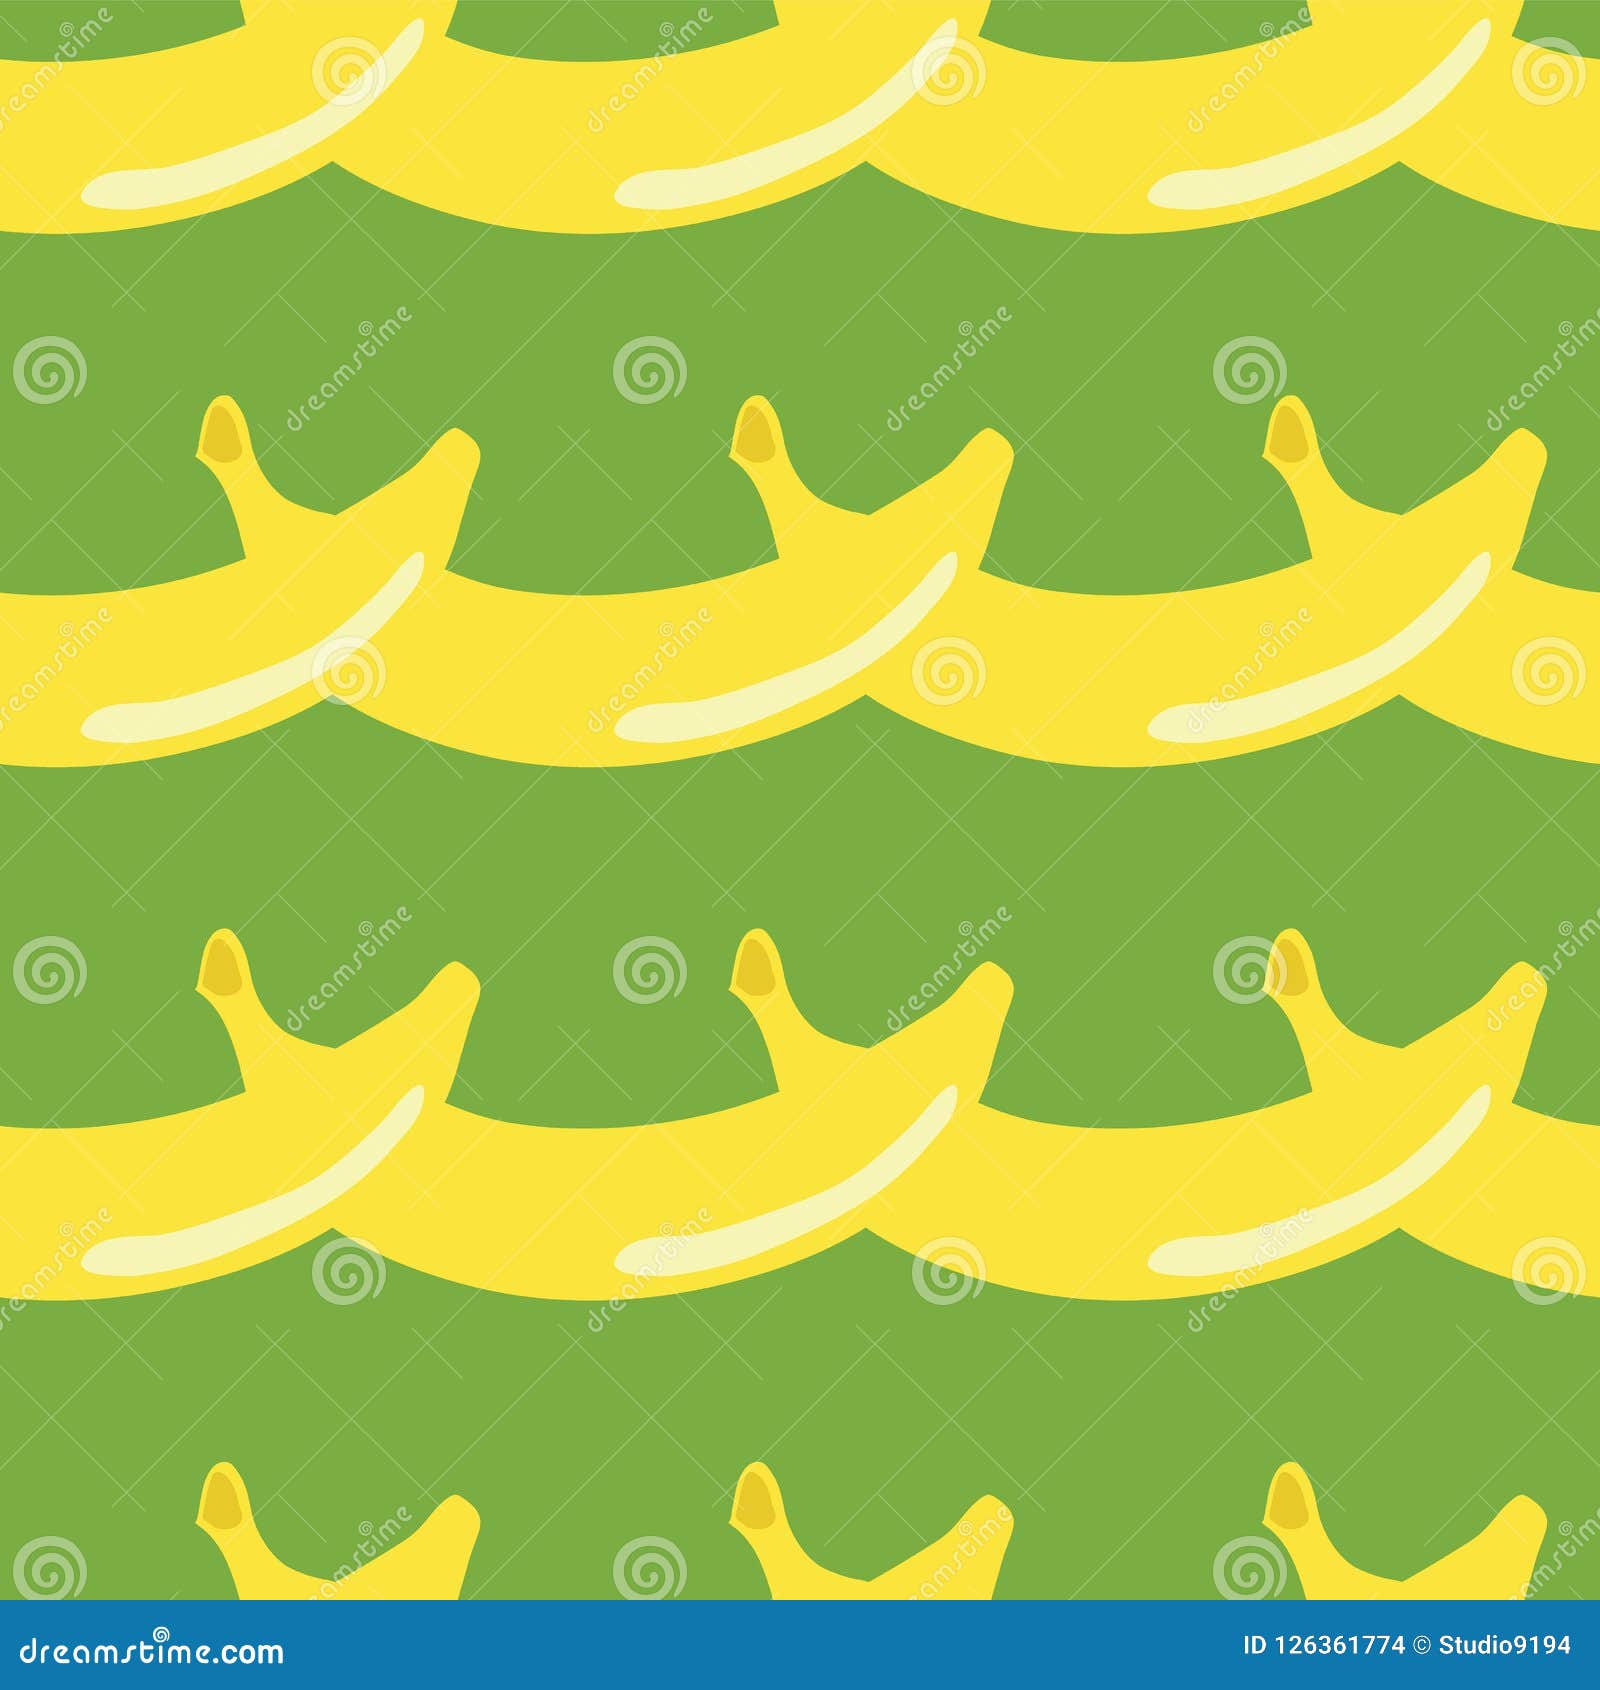 Banana Geometric Seamless Pattern Retro Style on Green Background